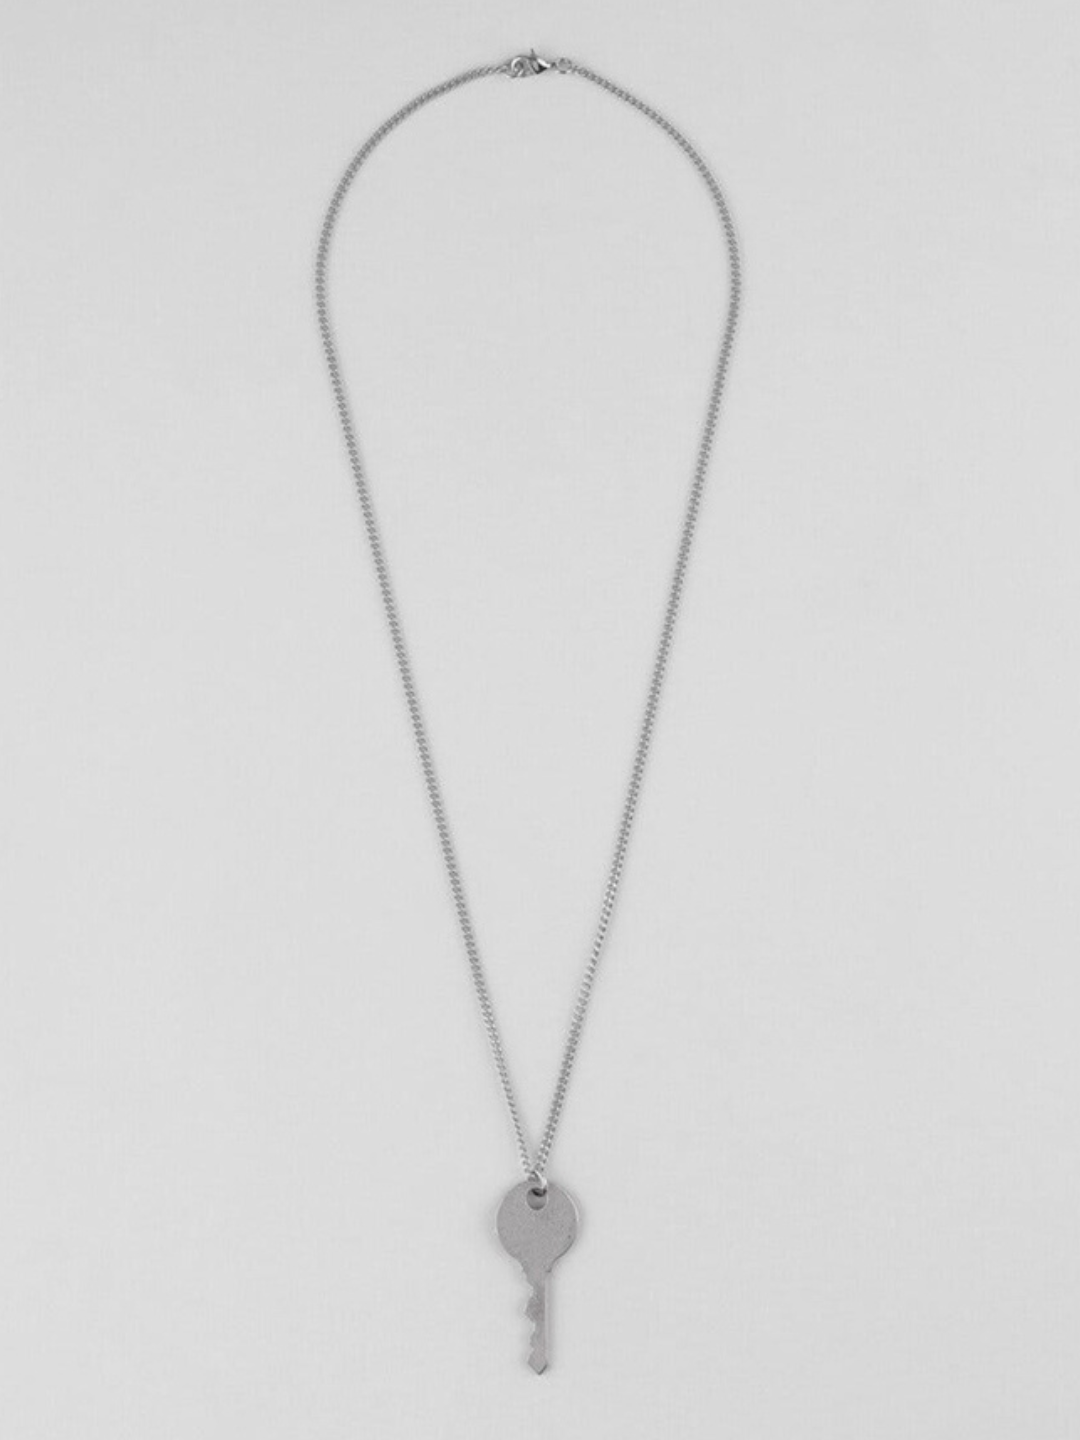 [QUARQOR] Trendy Vintage Key Necklace AR67